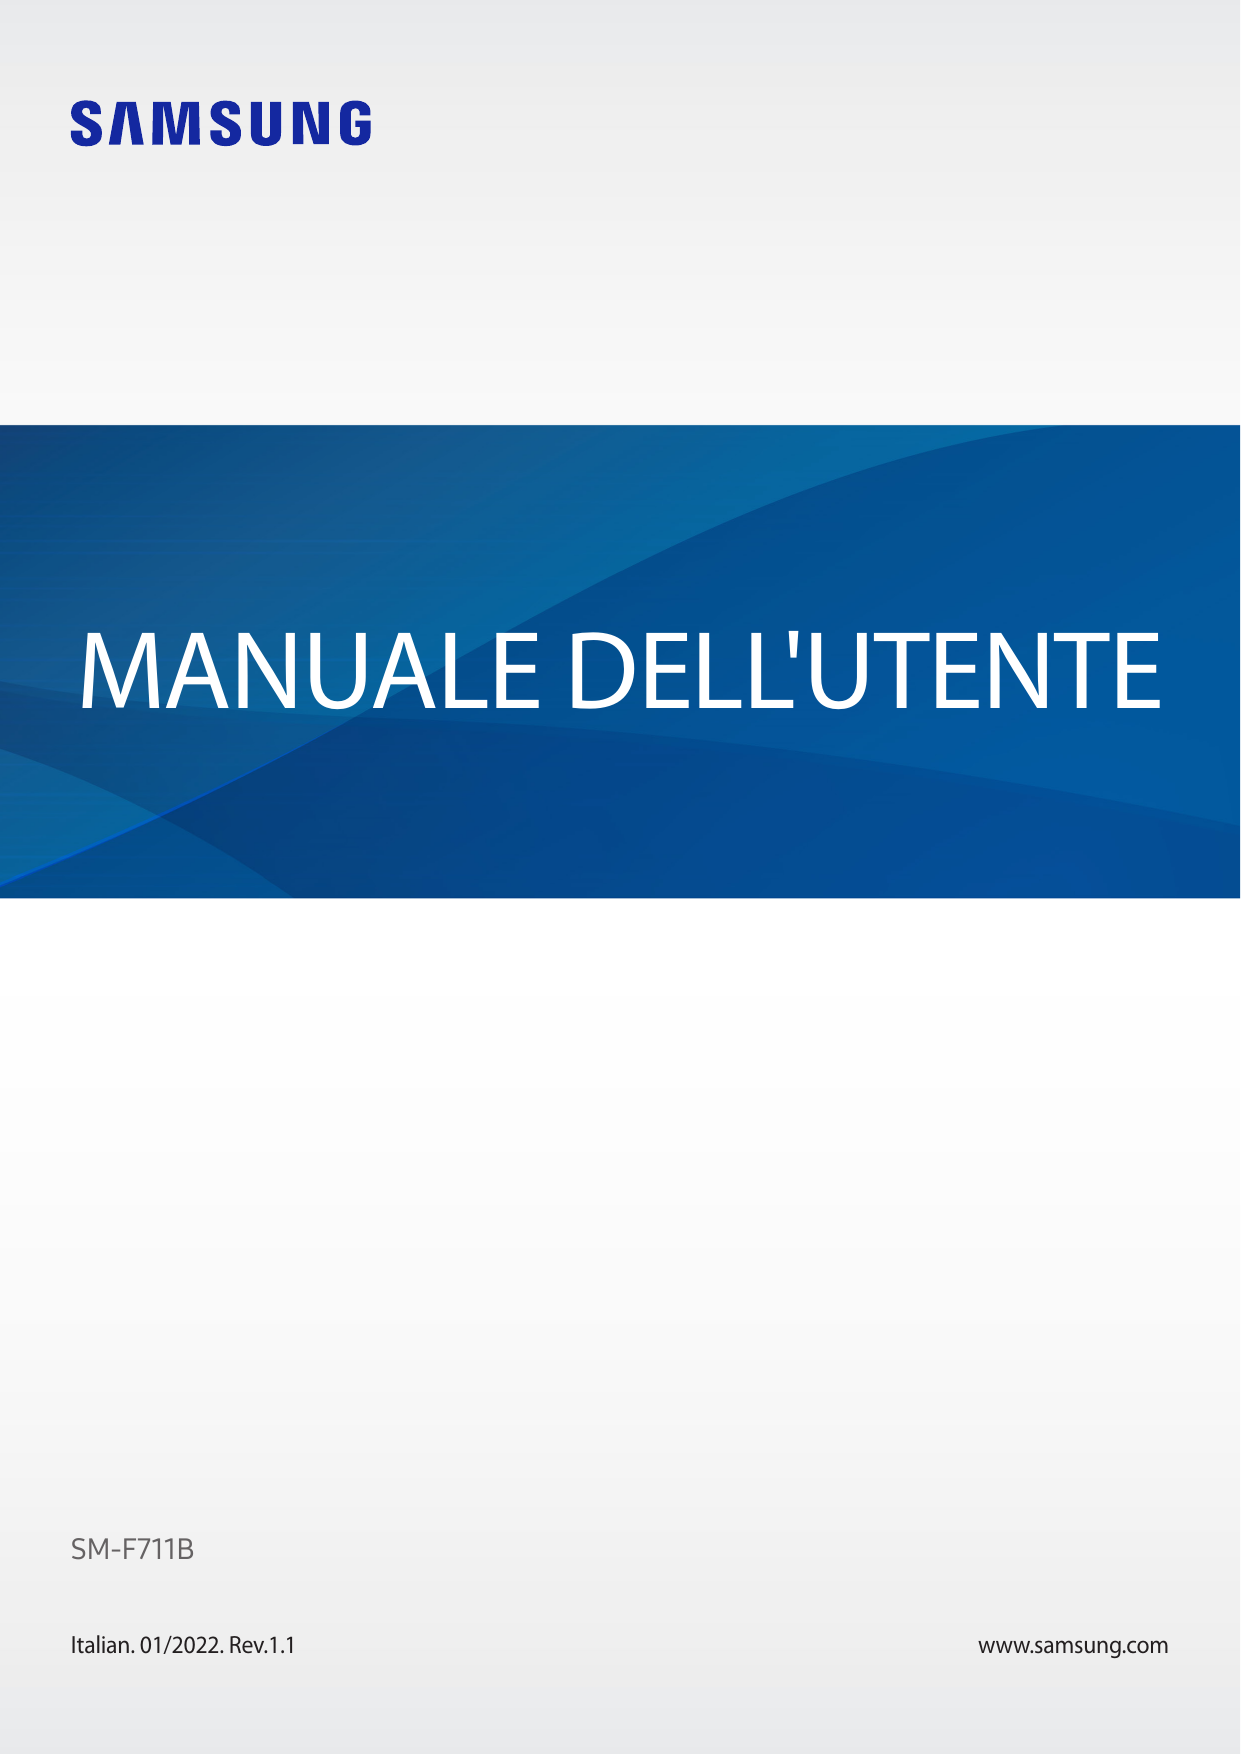 MANUALE DELL'UTENTESM-F711BItalian. 01/2022. Rev.1.1www.samsung.com